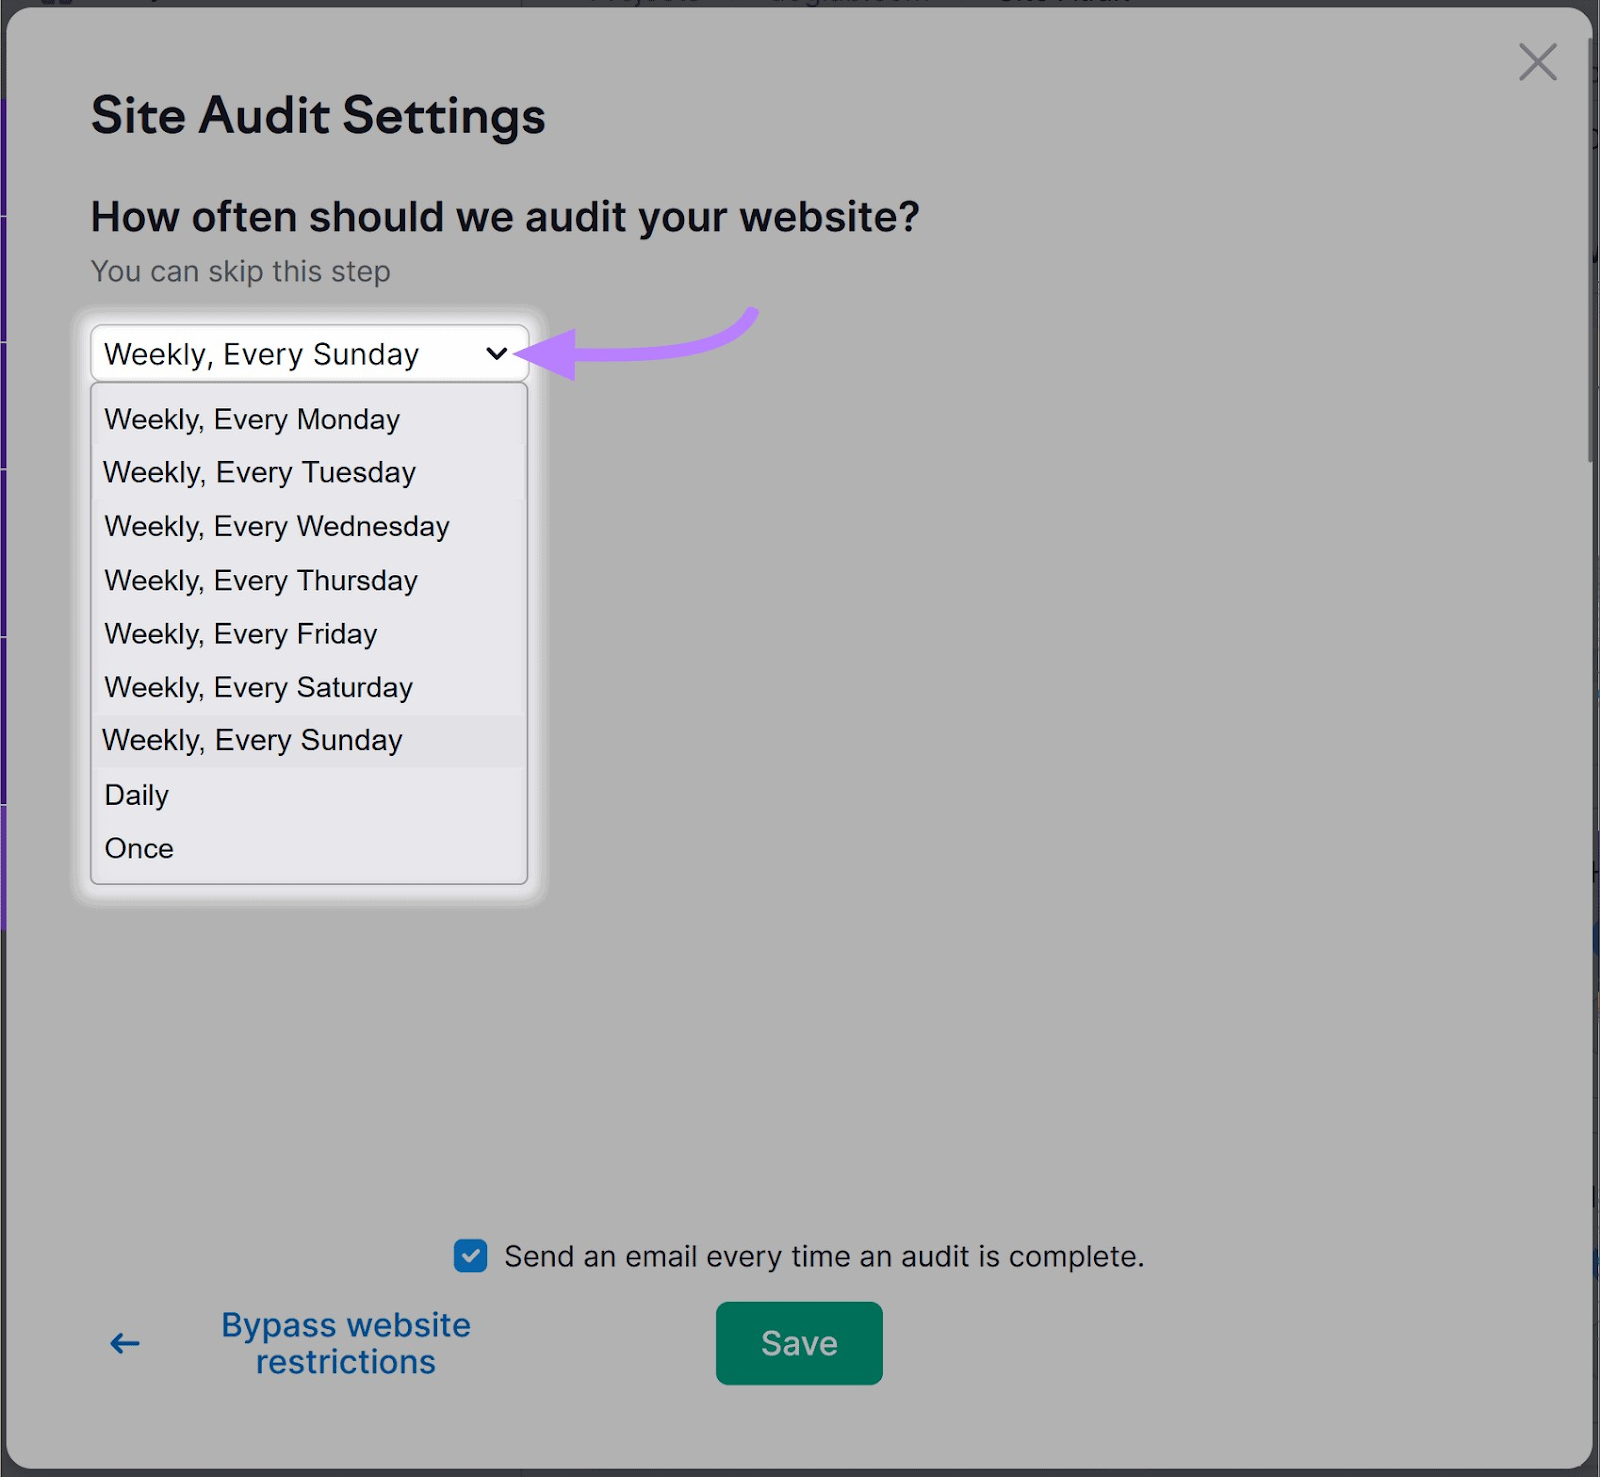 "How often should we audit your website?" section under Site Audit Settings